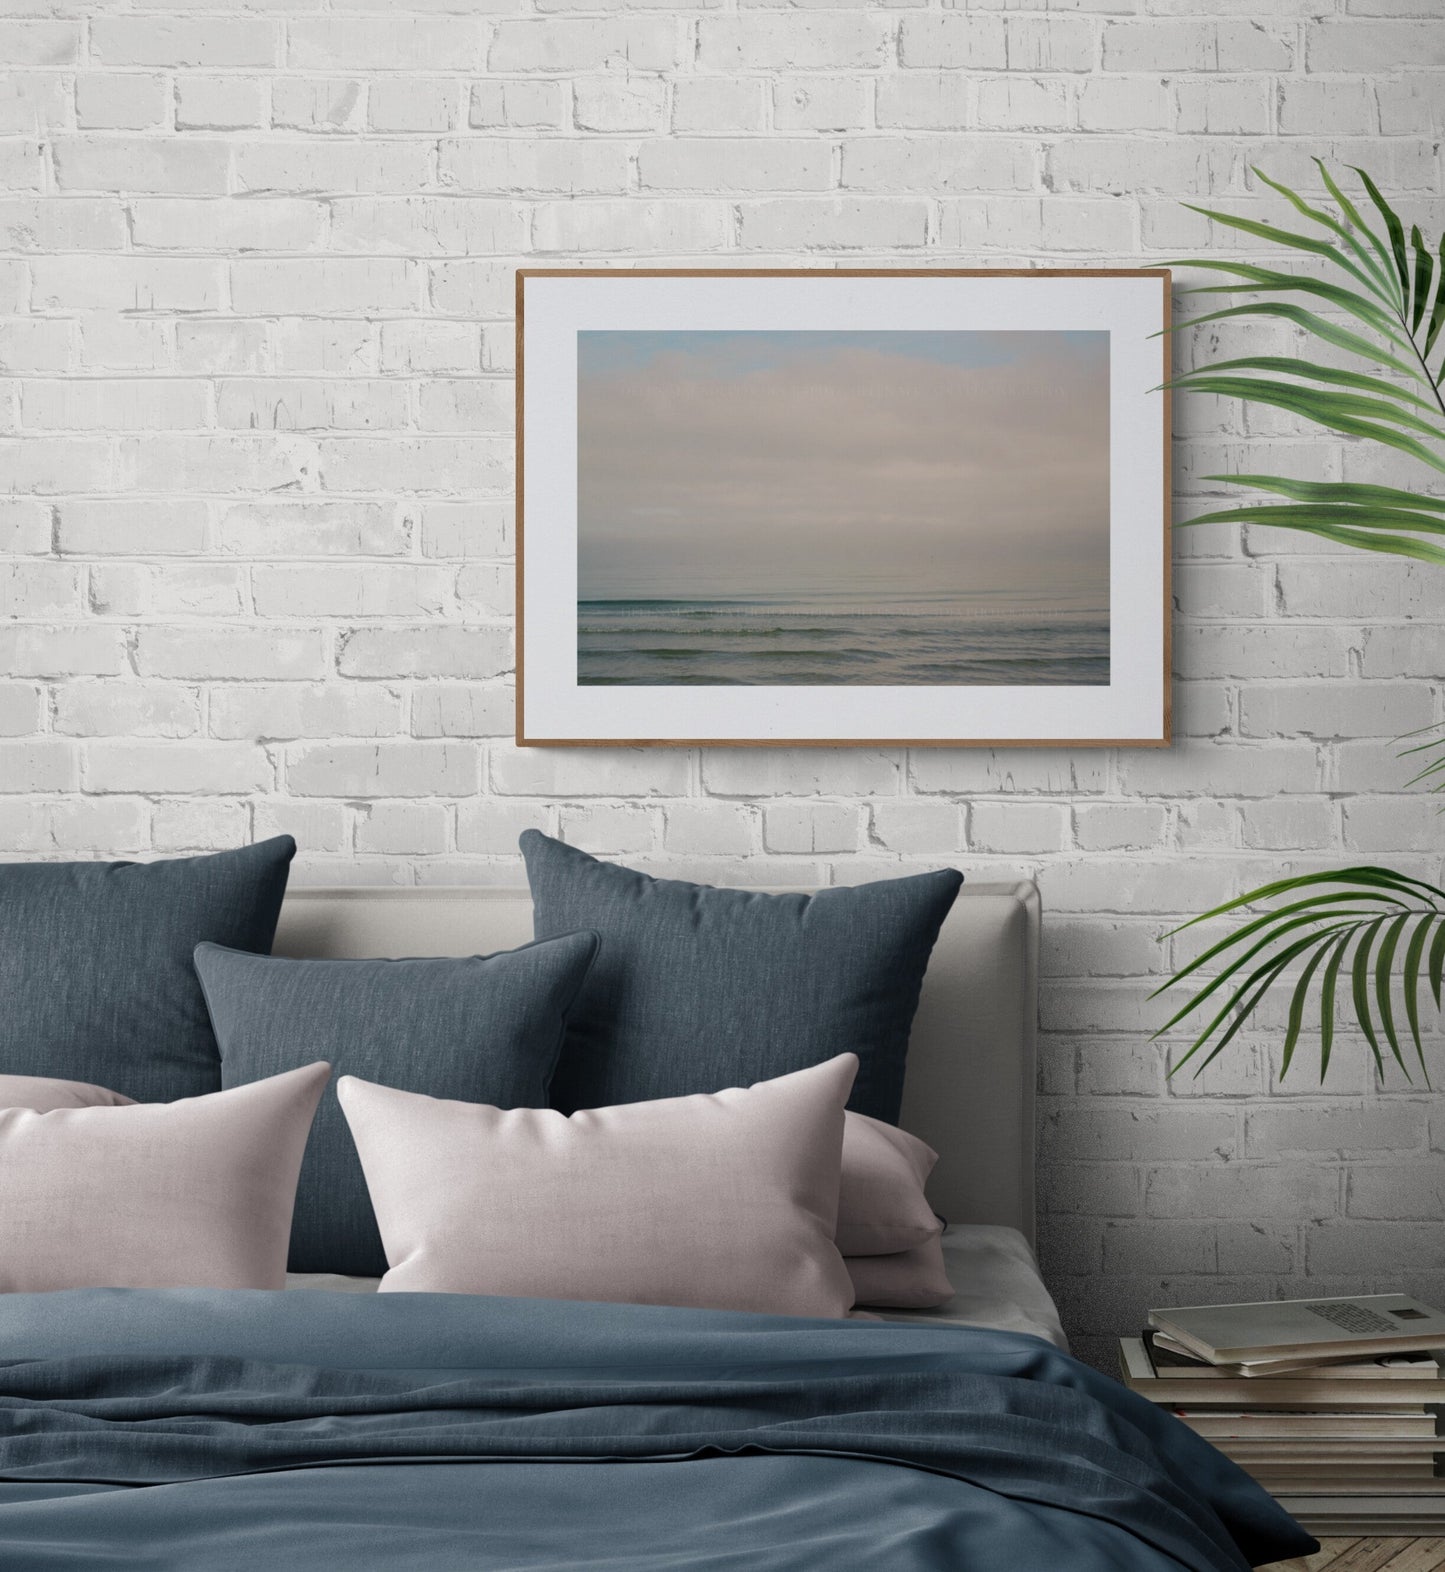 Cape Cod Beach Blue Ocean Waters as Wall Art in a Bedroom